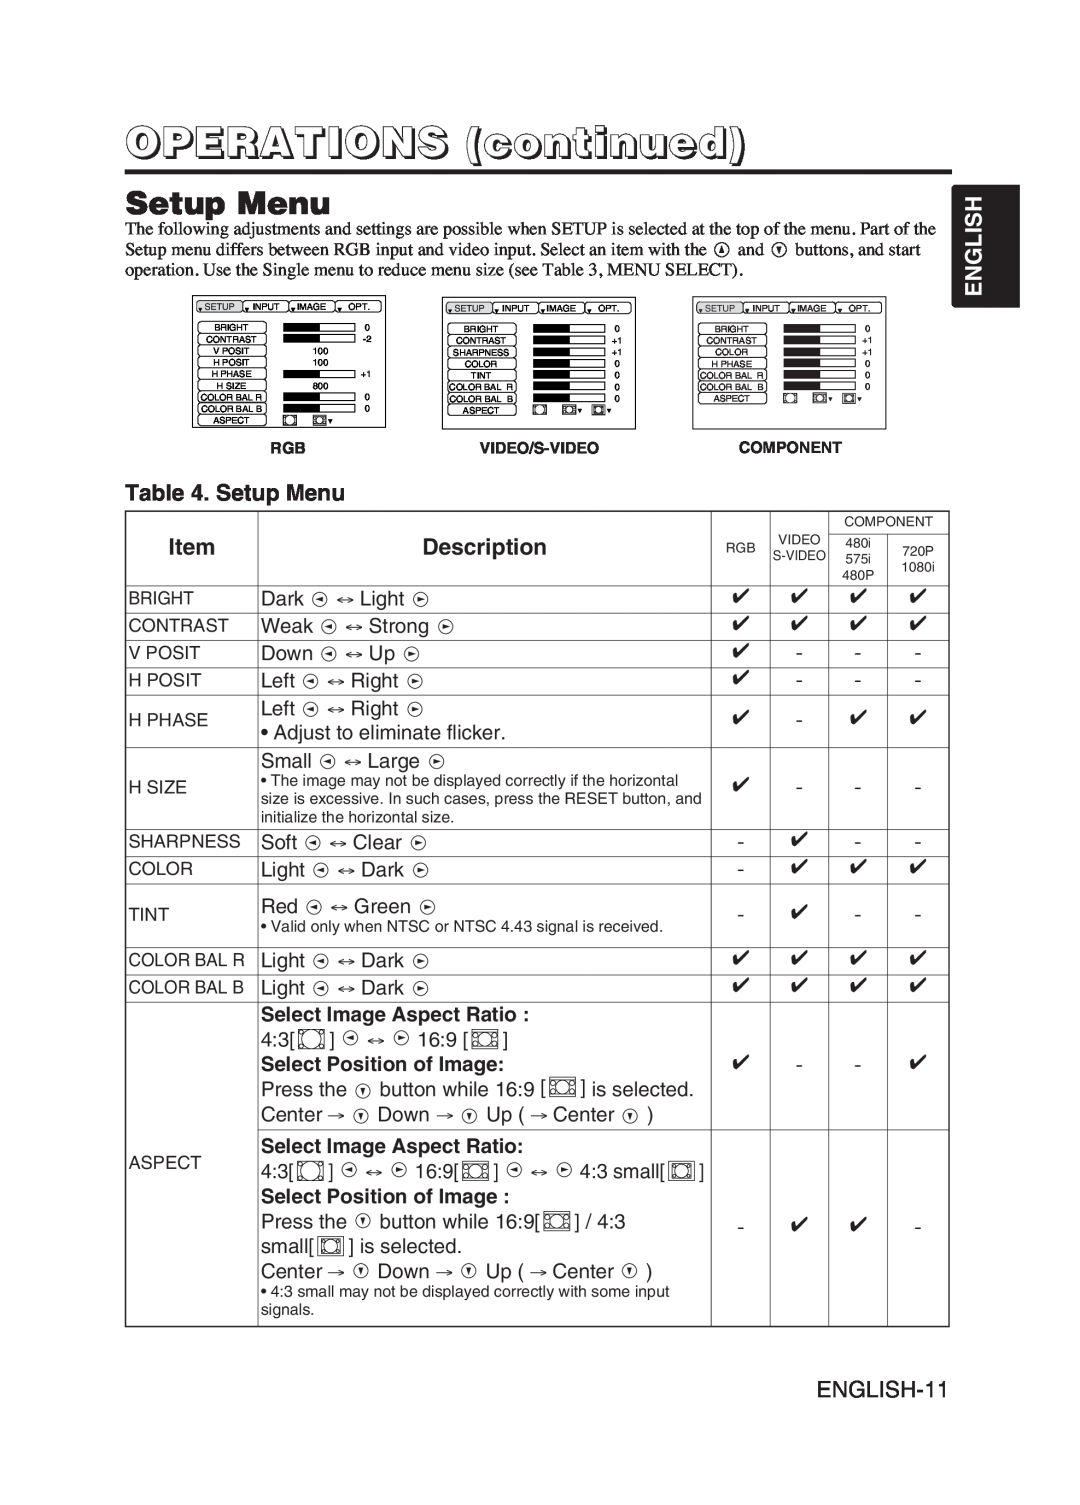 Hitachi CPS225W user manual Setup Menu, OPERATIONS continued, Description, English, Select Image Aspect Ratio 